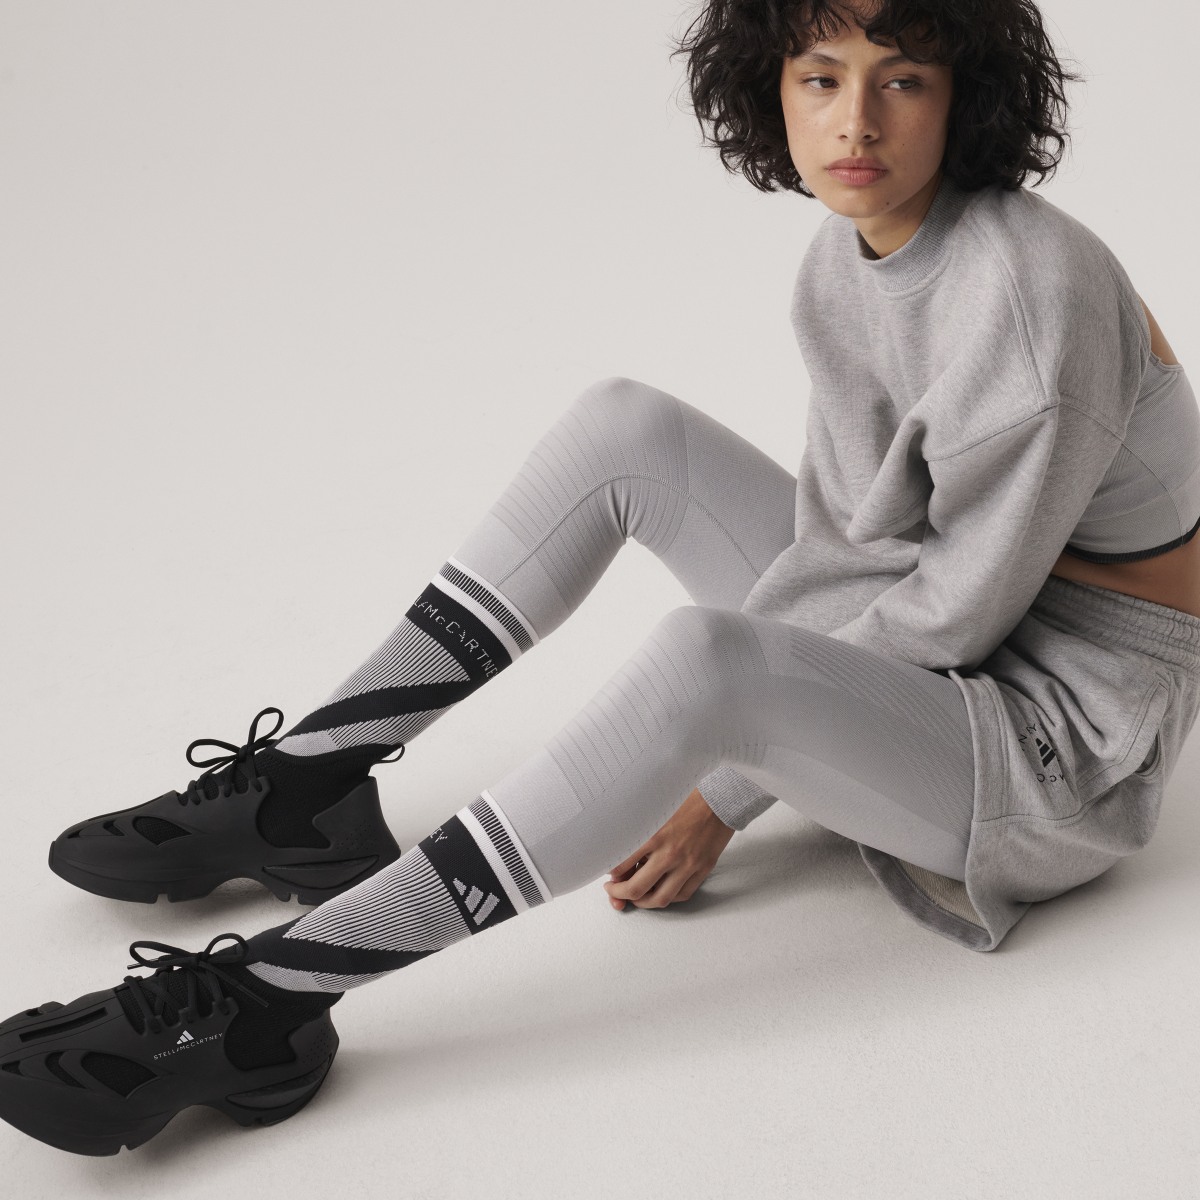 Adidas by Stella McCartney Sportswear Shoe. 6